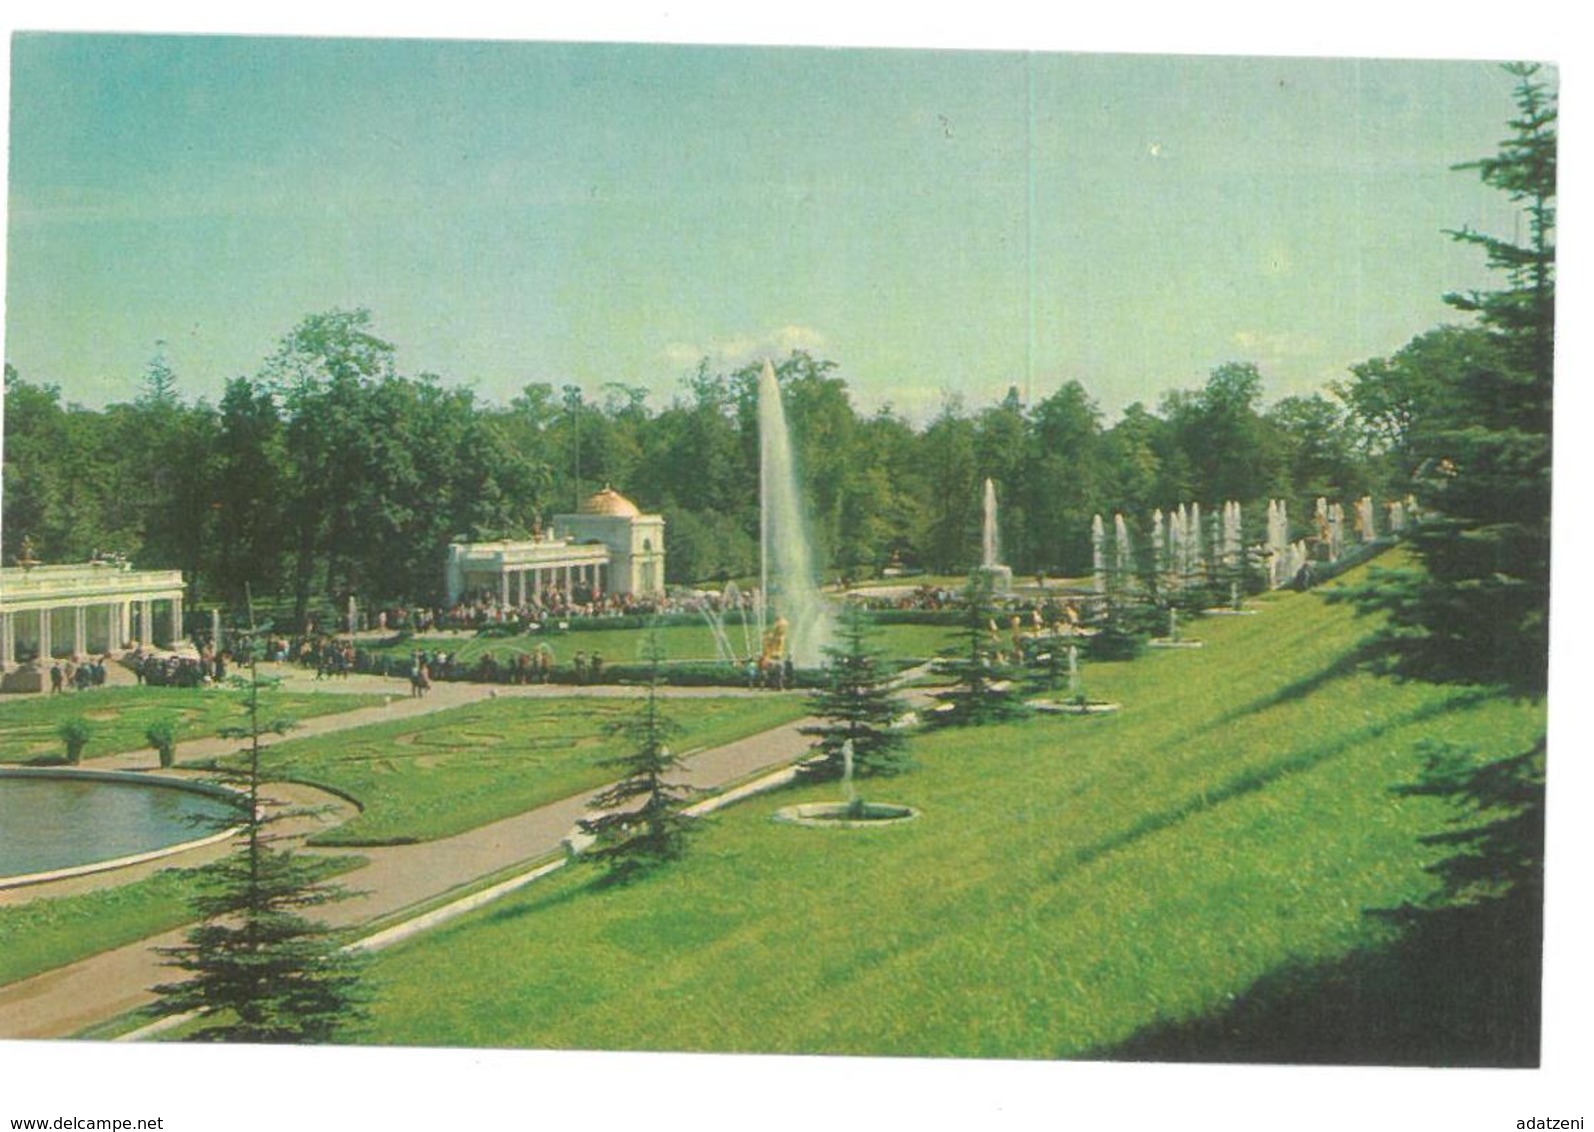 Russia Petrodvorets Peterhof 16 cartoline Condizioni come da scansione